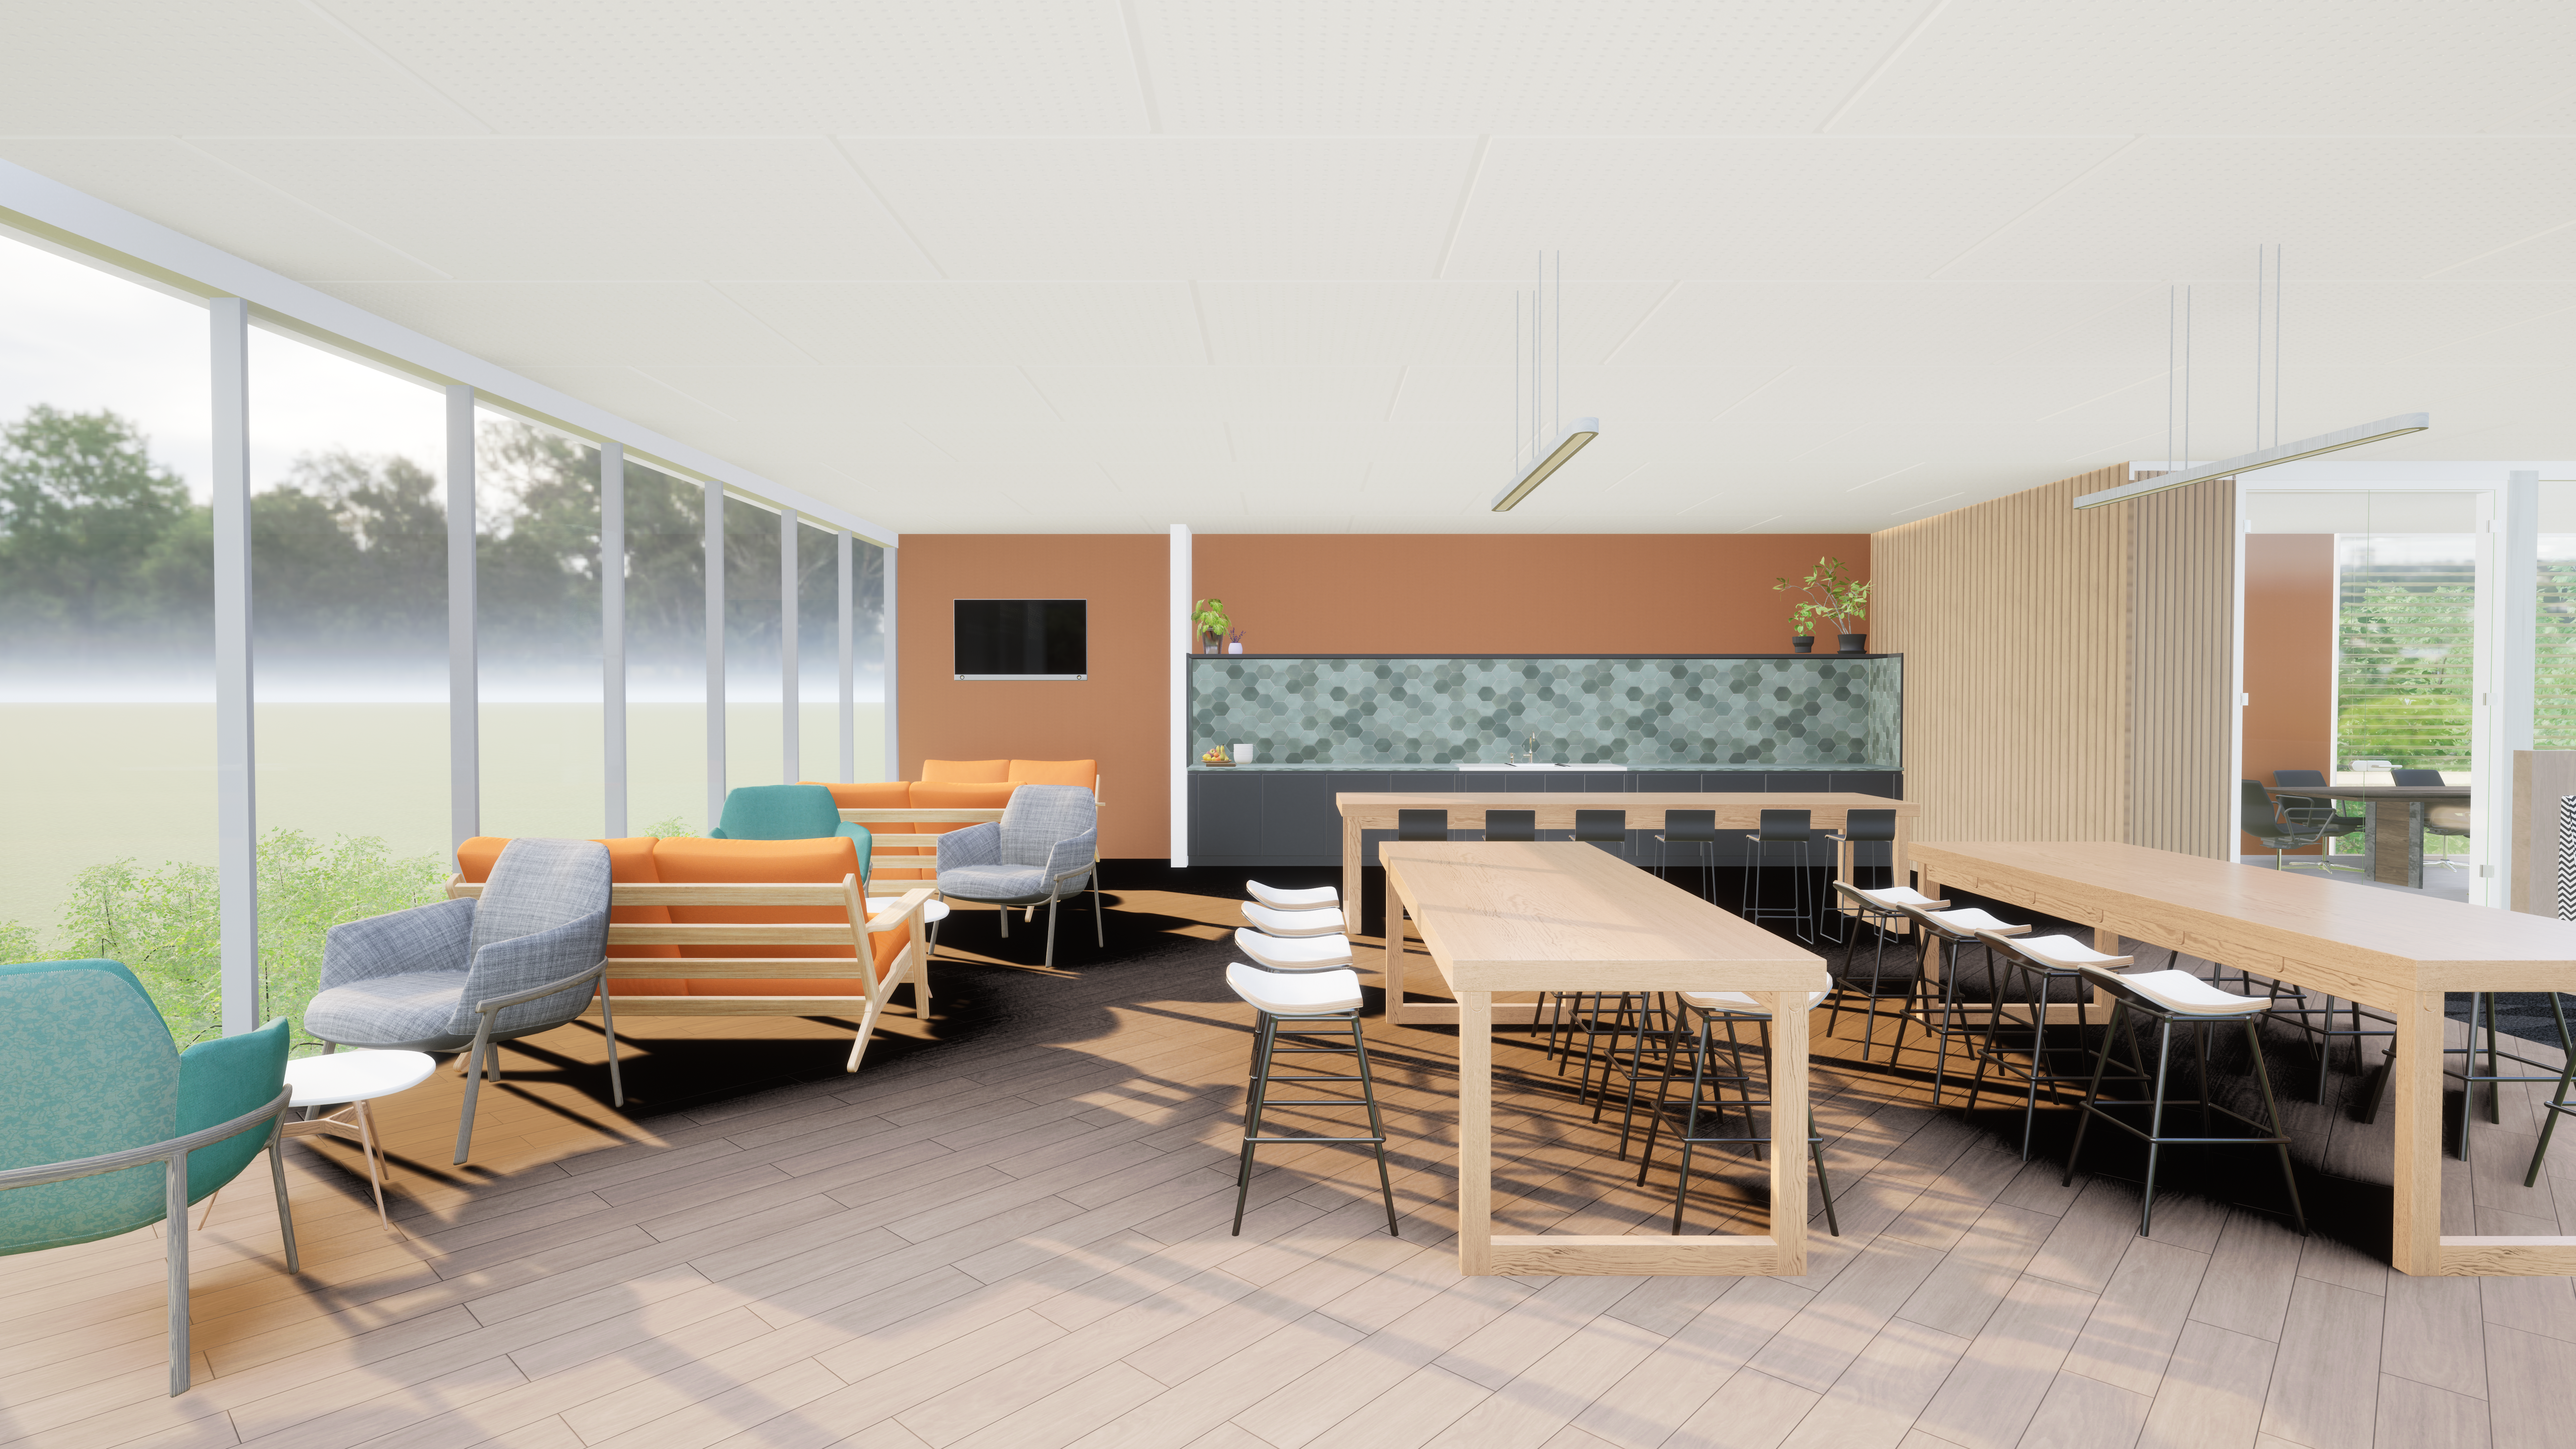 Creating an Inspiring Interior Design Scheme to Encourage Office Collaboration